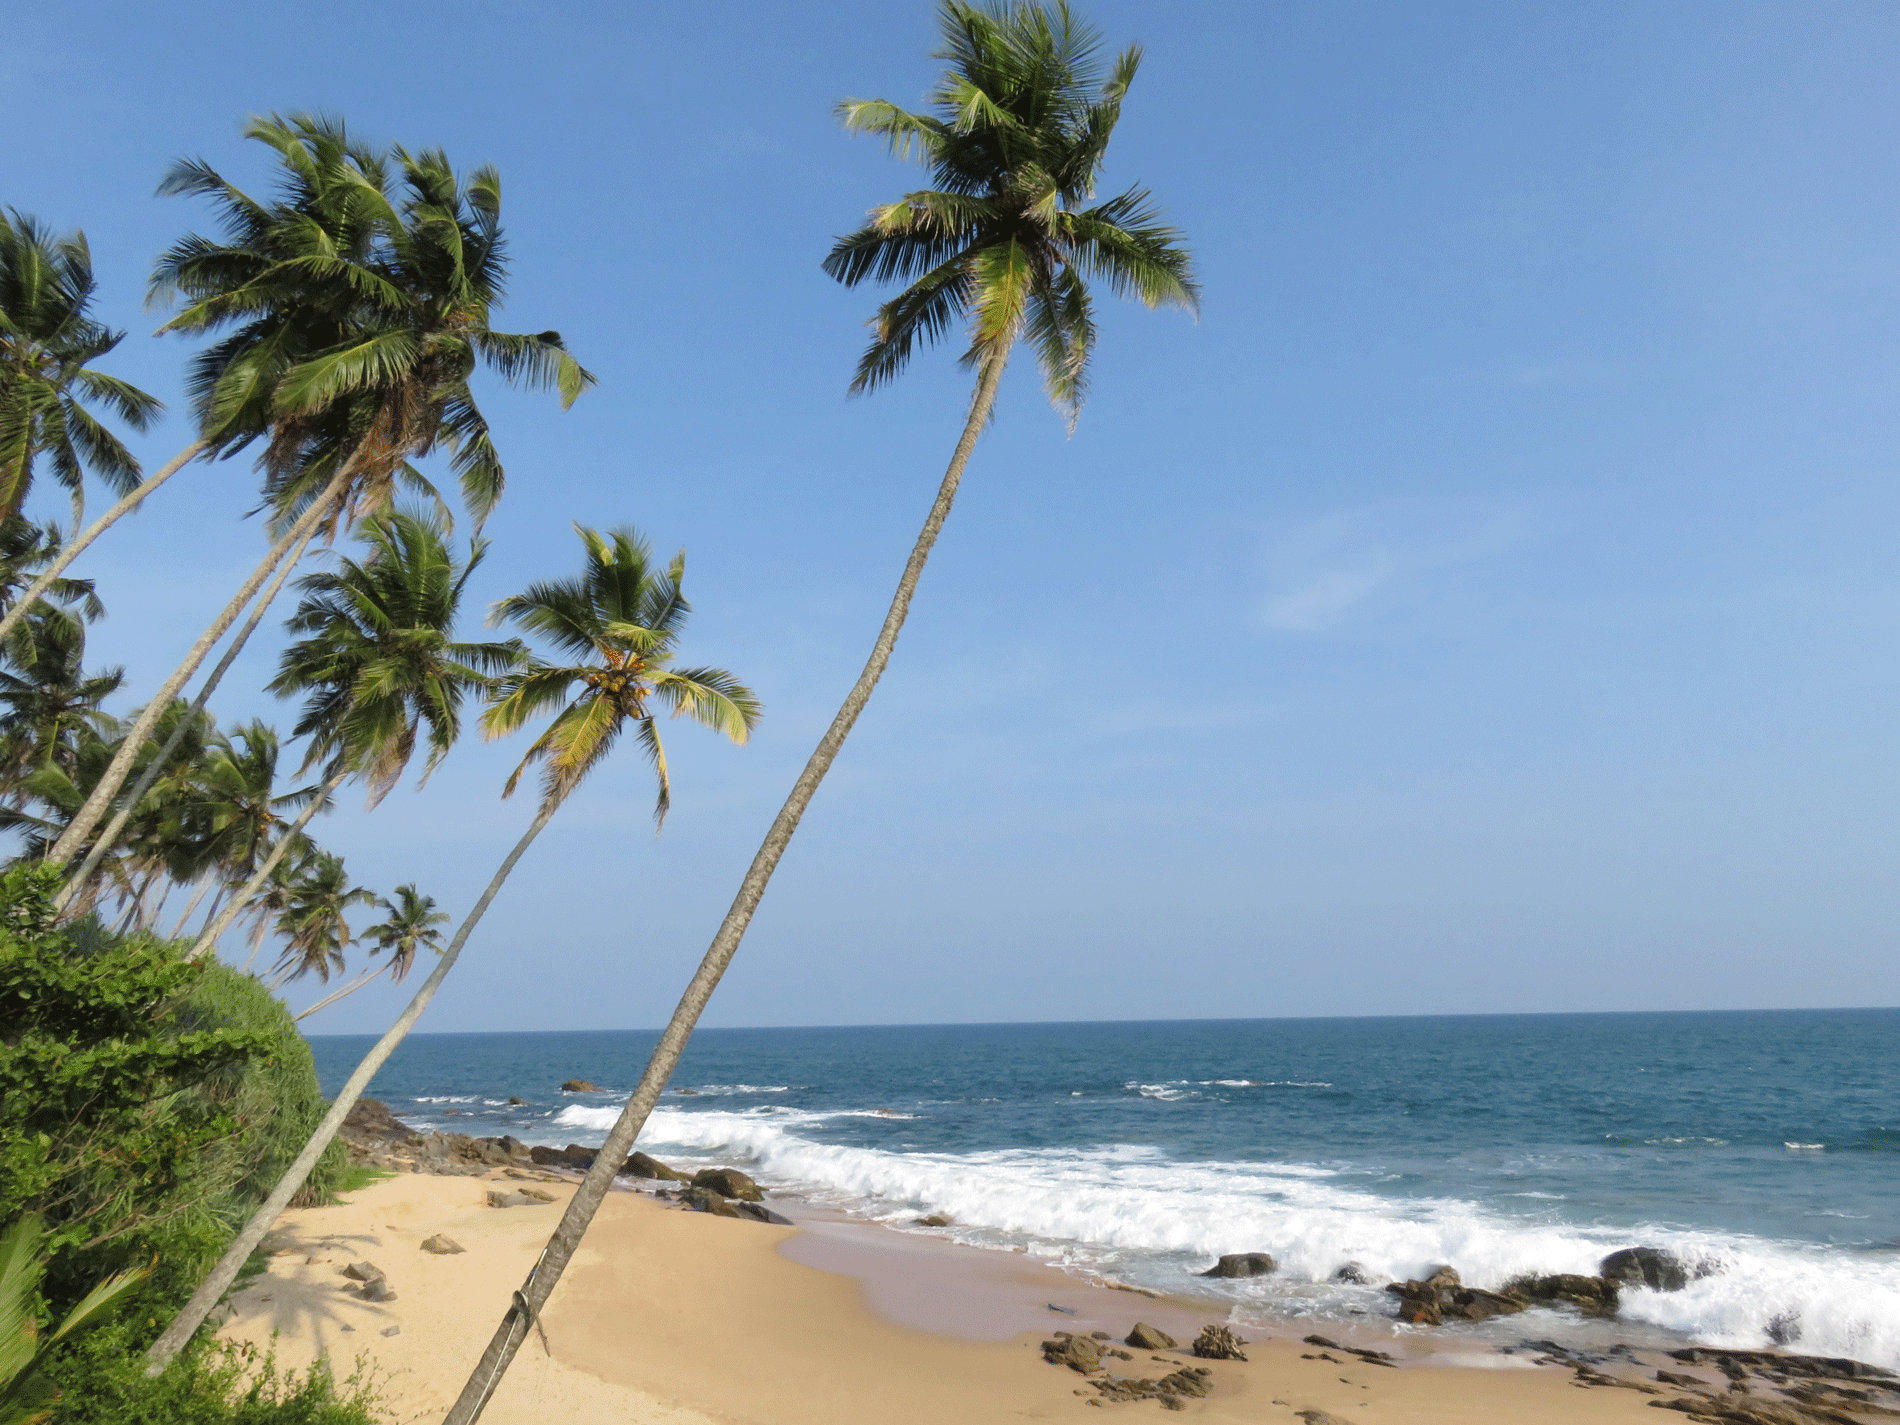 Day 75, Hambantota, Sri Lanka